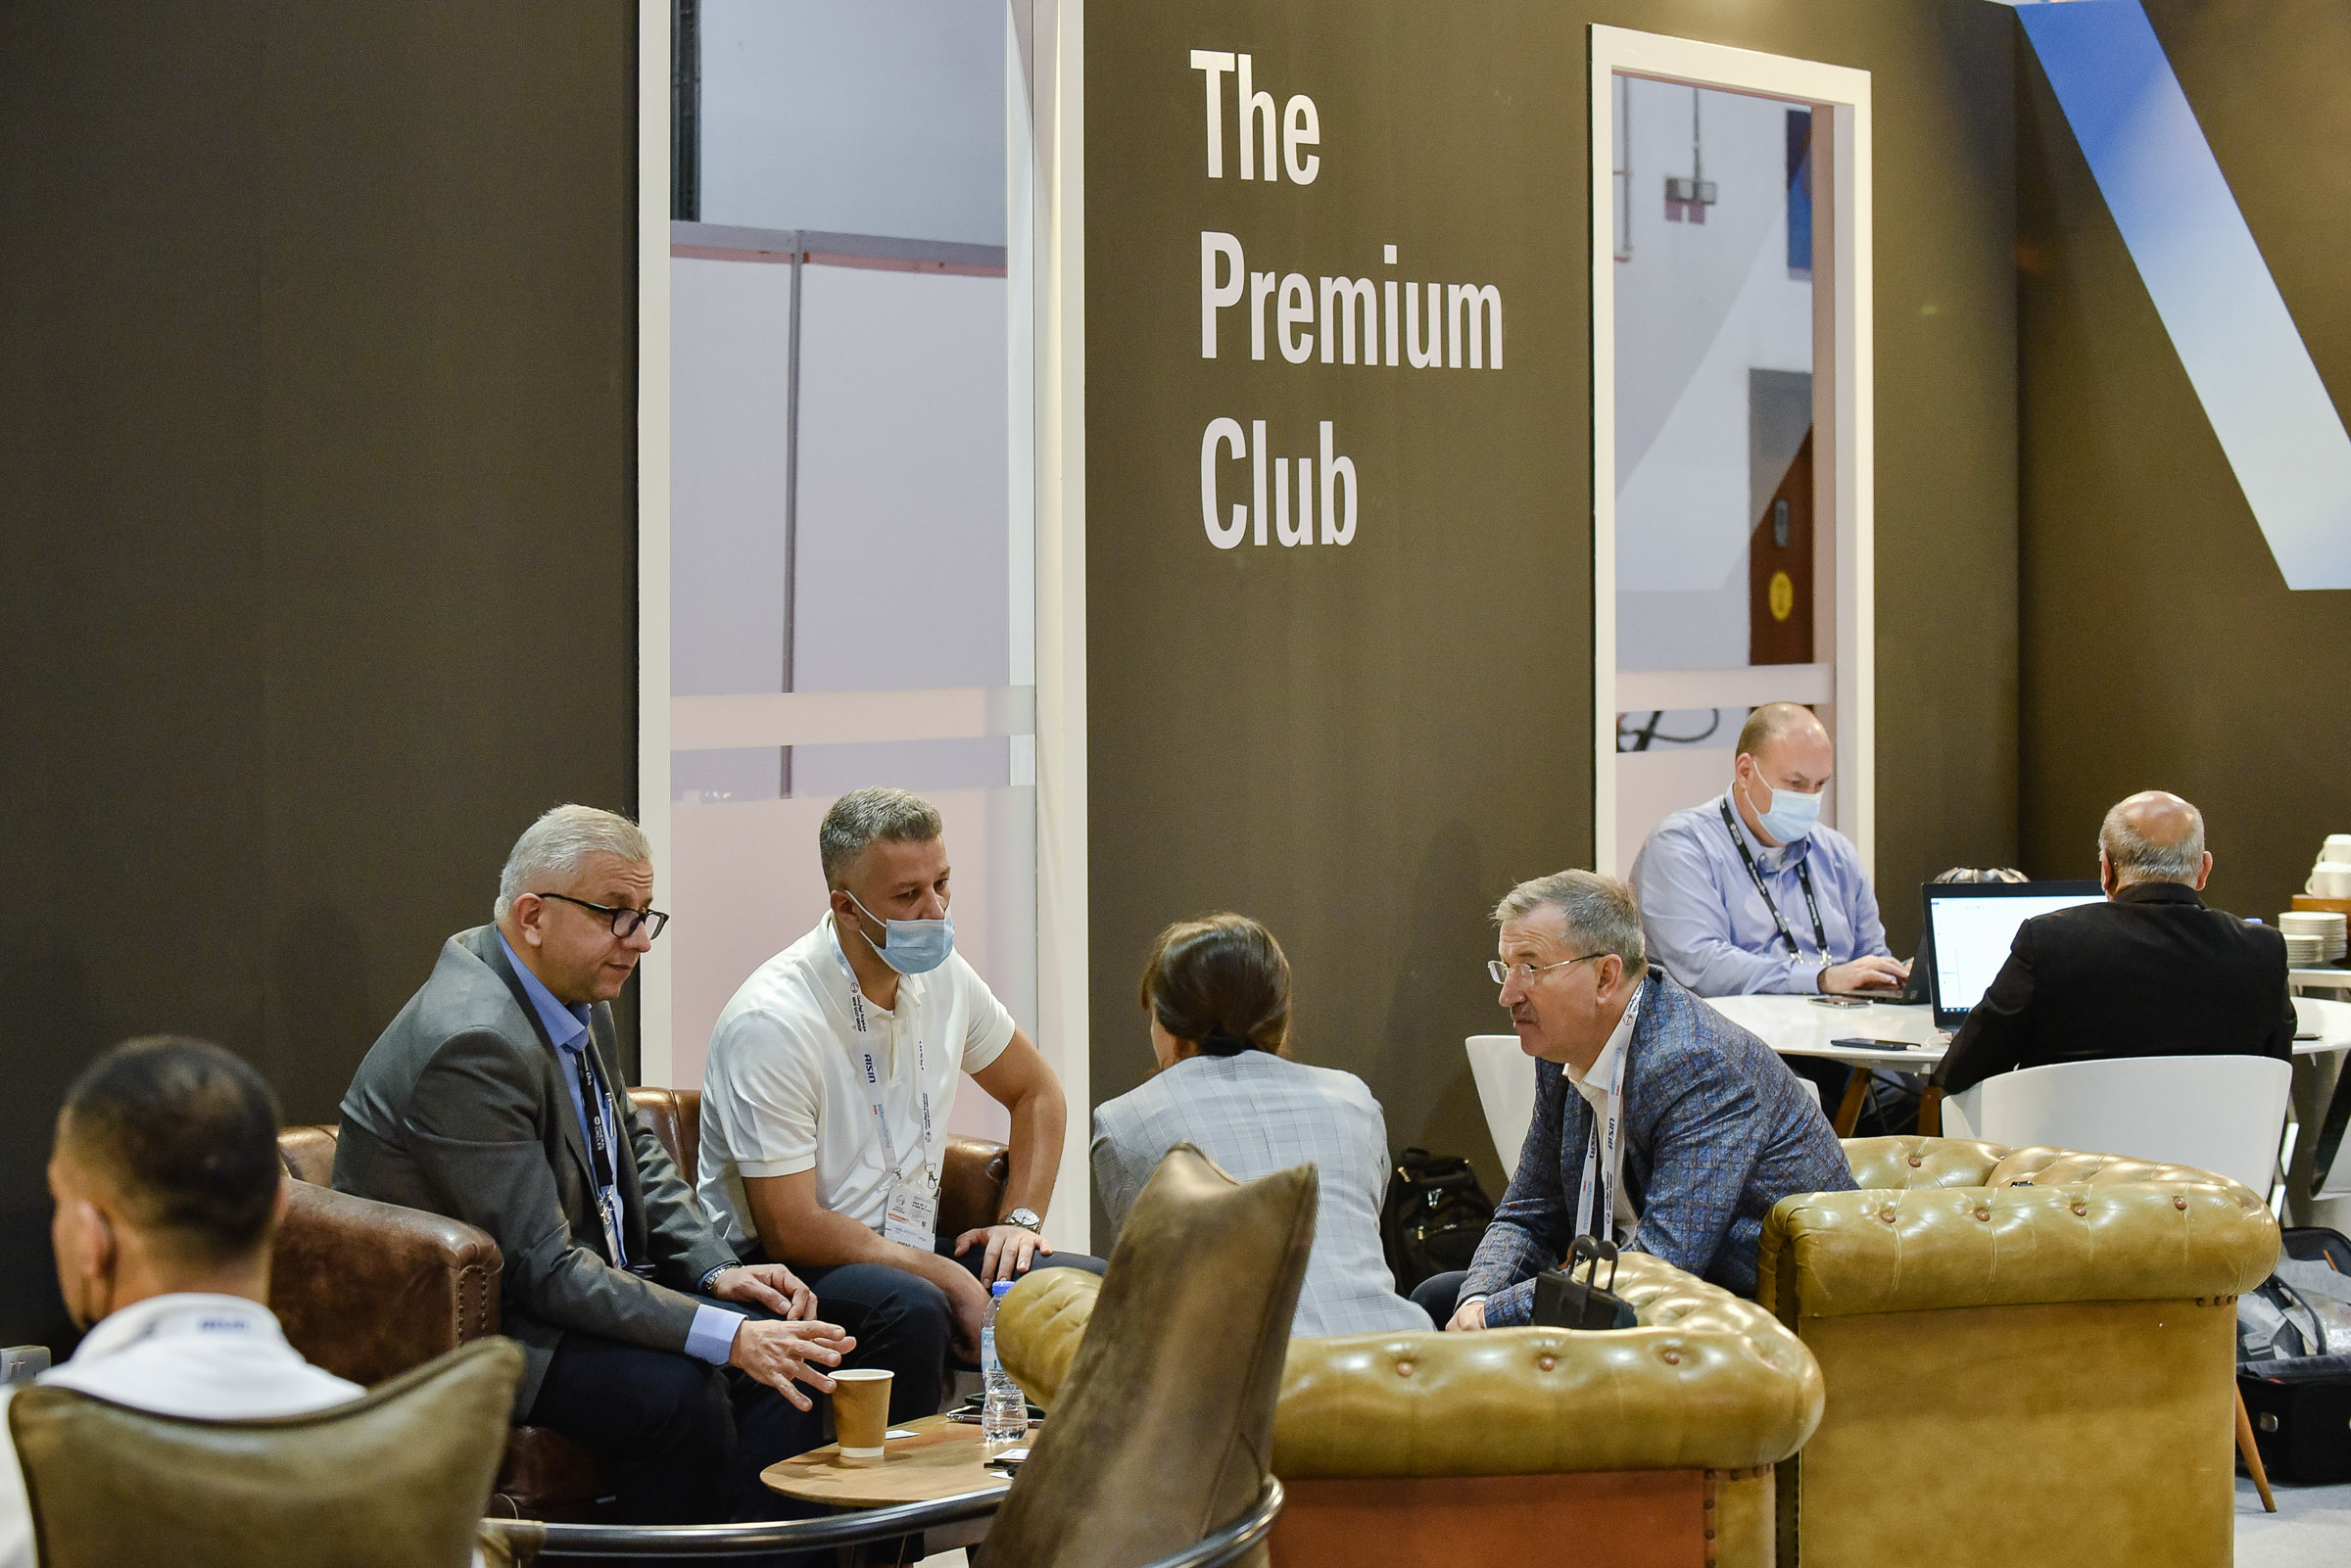 The Premium Club at Automechanika Dubai